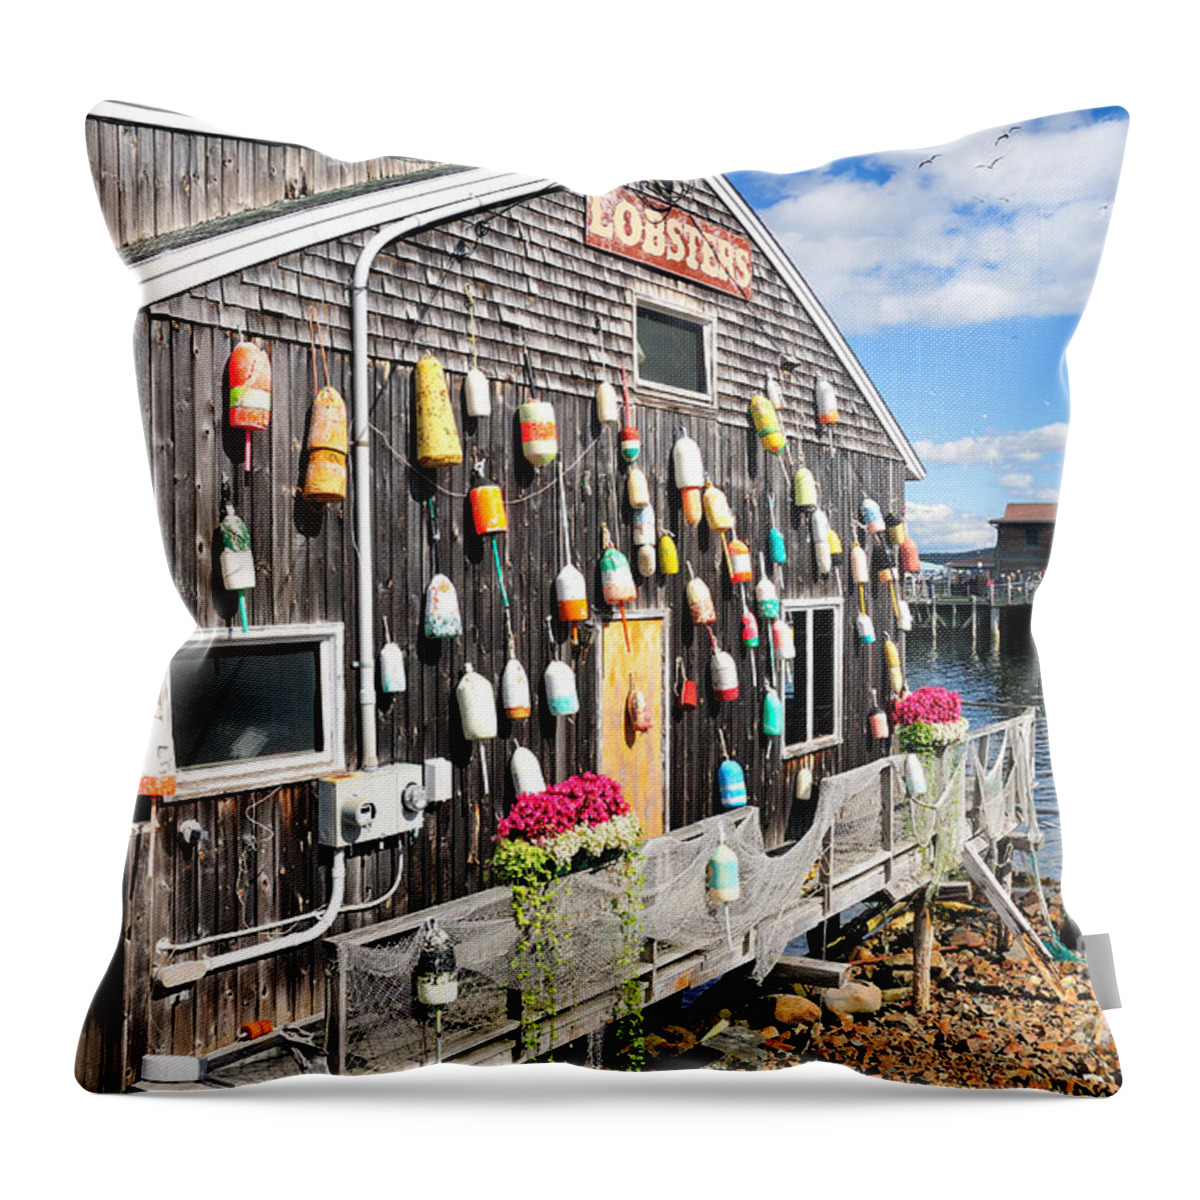 Bar Harbor Throw Pillow featuring the photograph Bar Harbor Restaurant by Betty LaRue